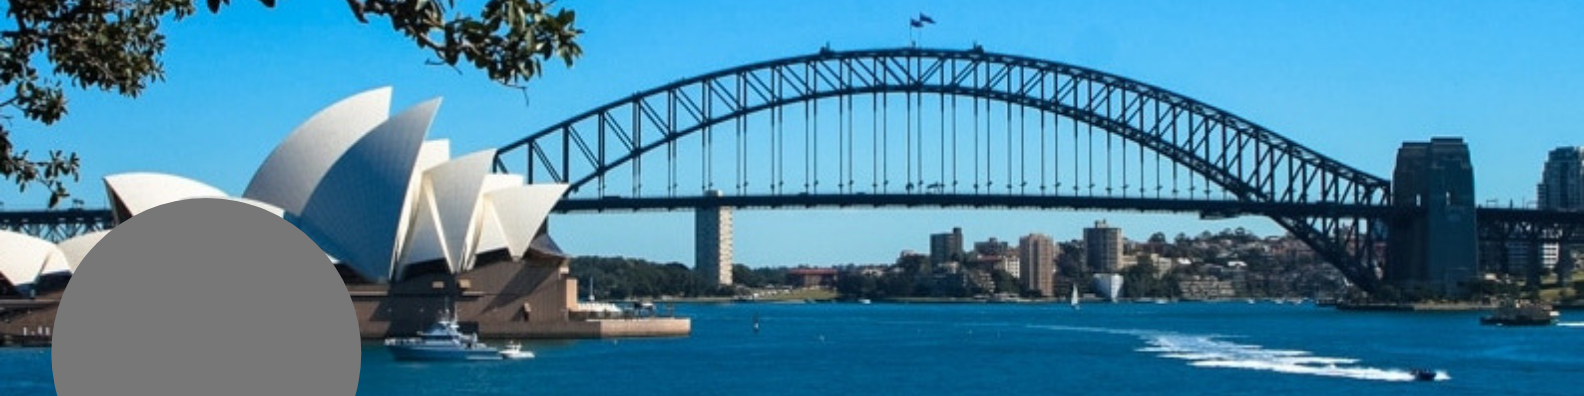 Sydney harbour LinkedIn background photo